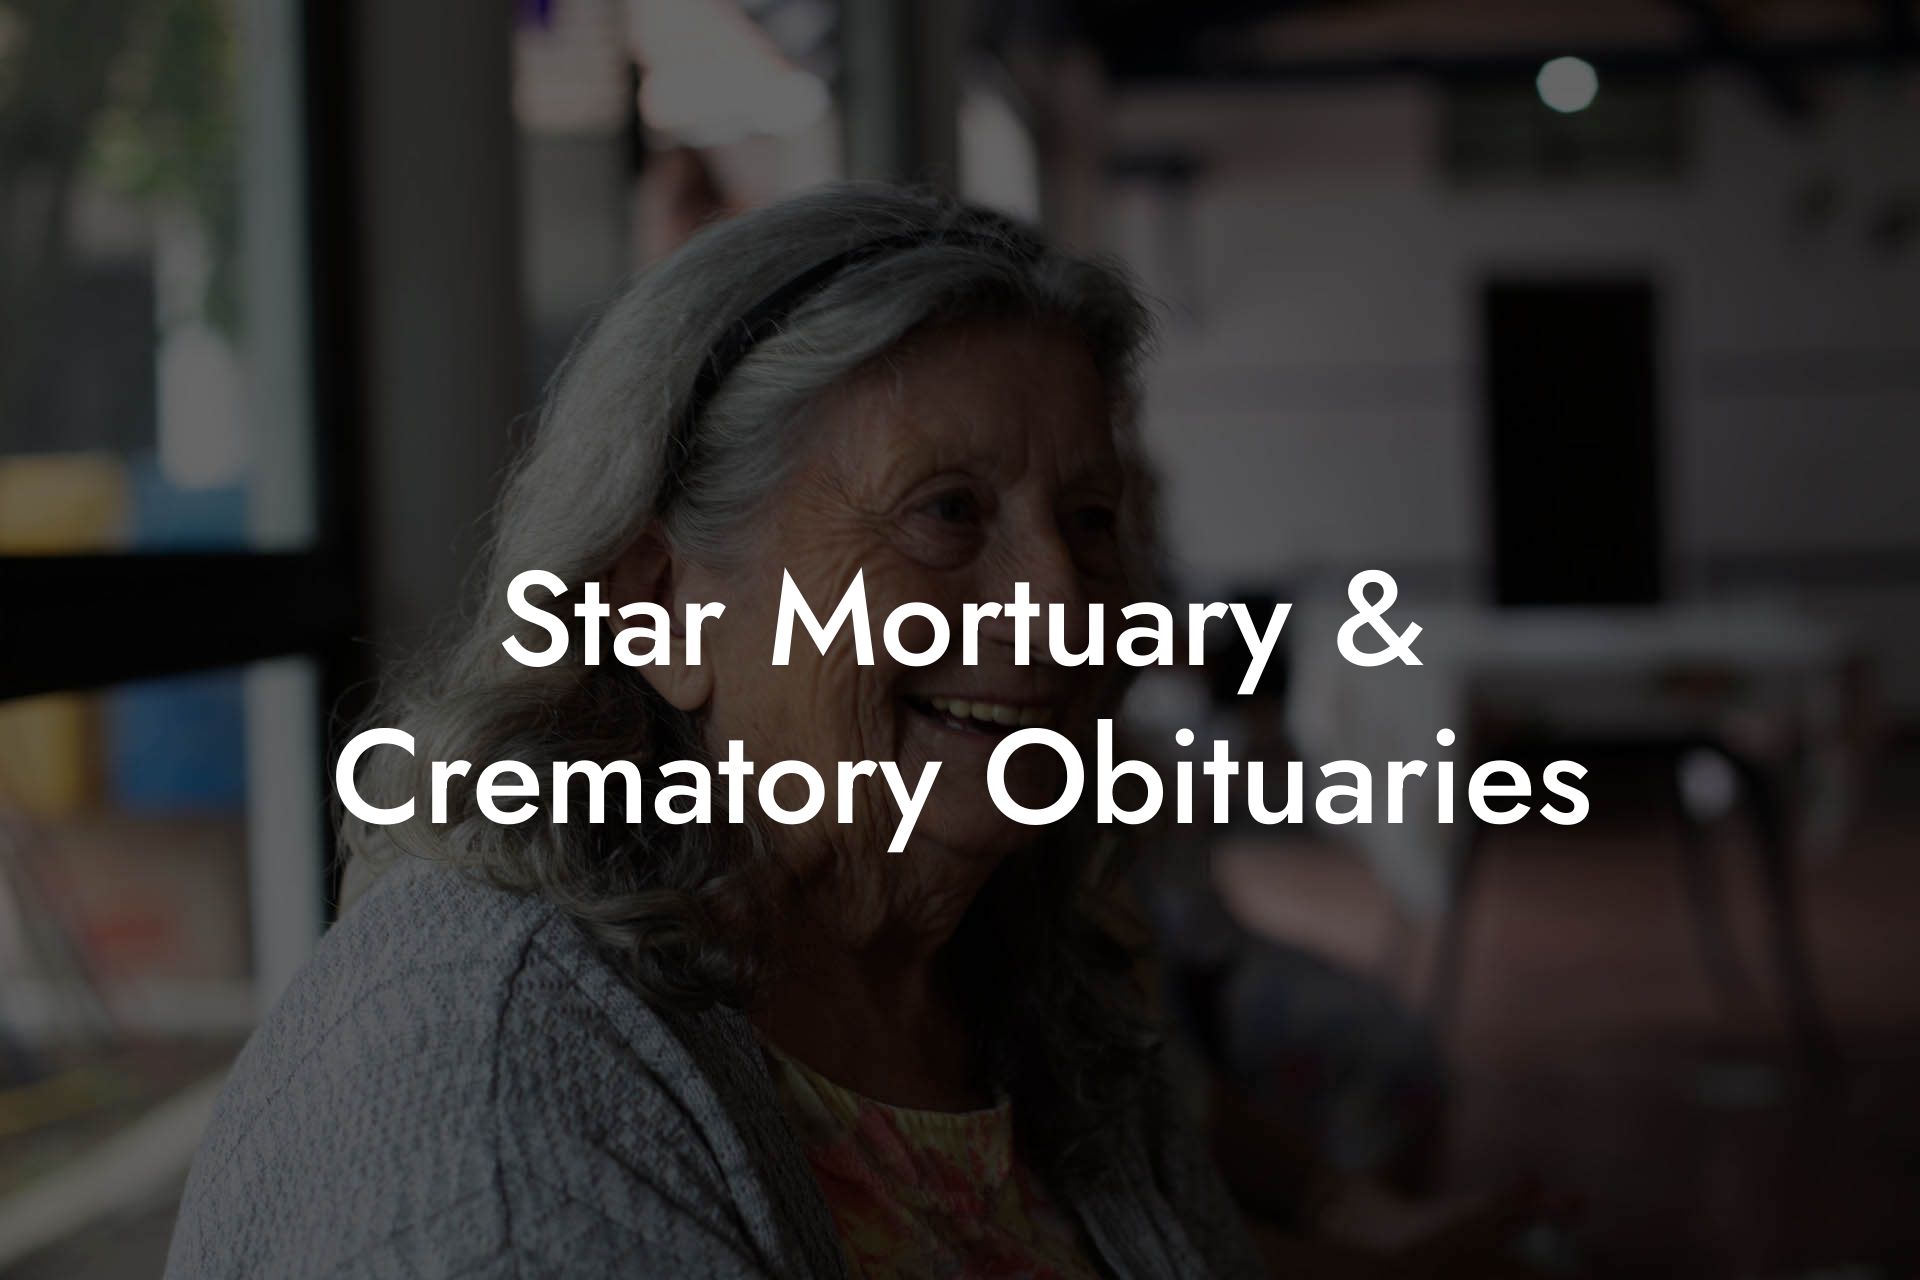 Star Mortuary & Crematory Obituaries